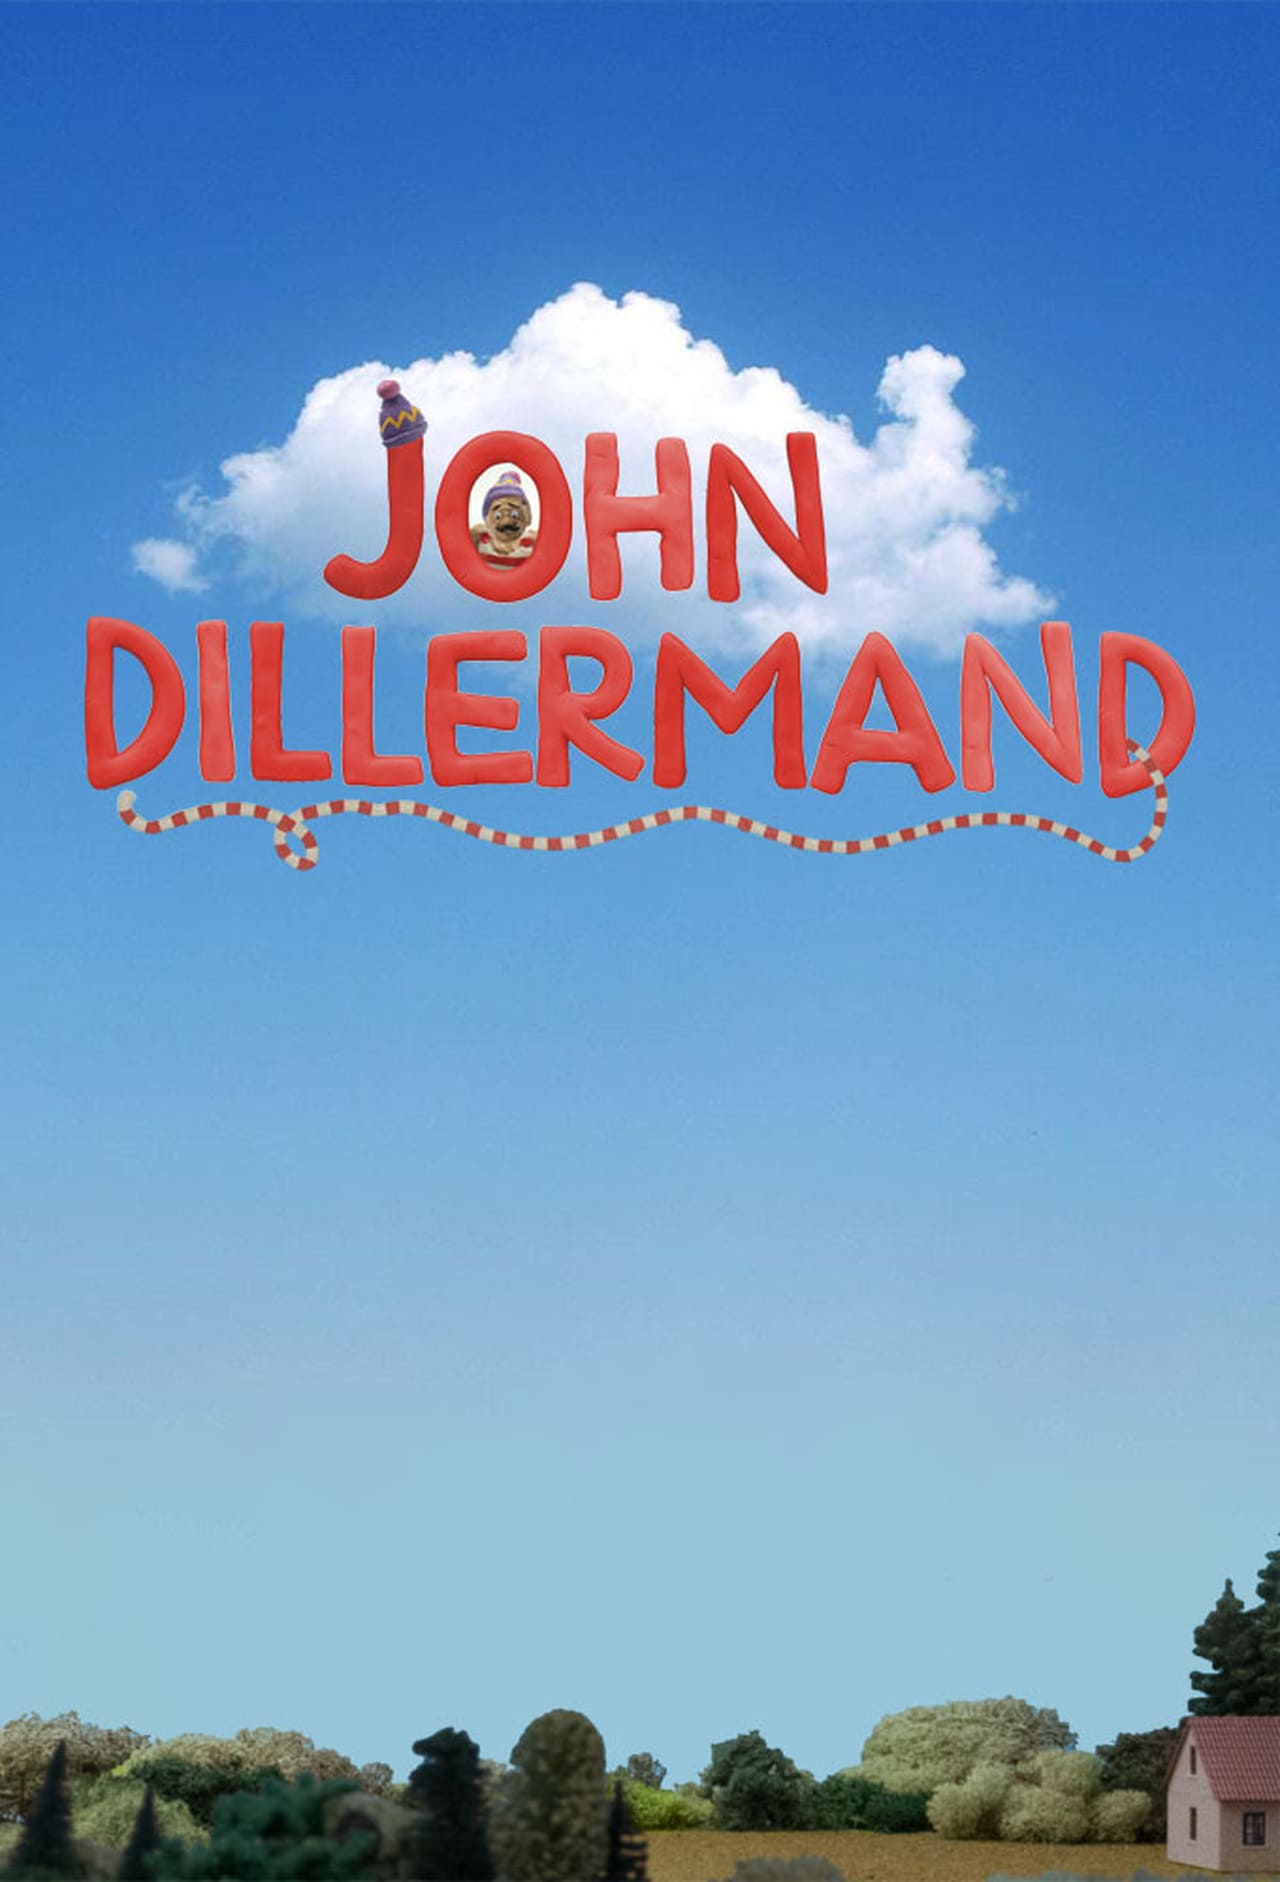 John Dillermand (season 1)